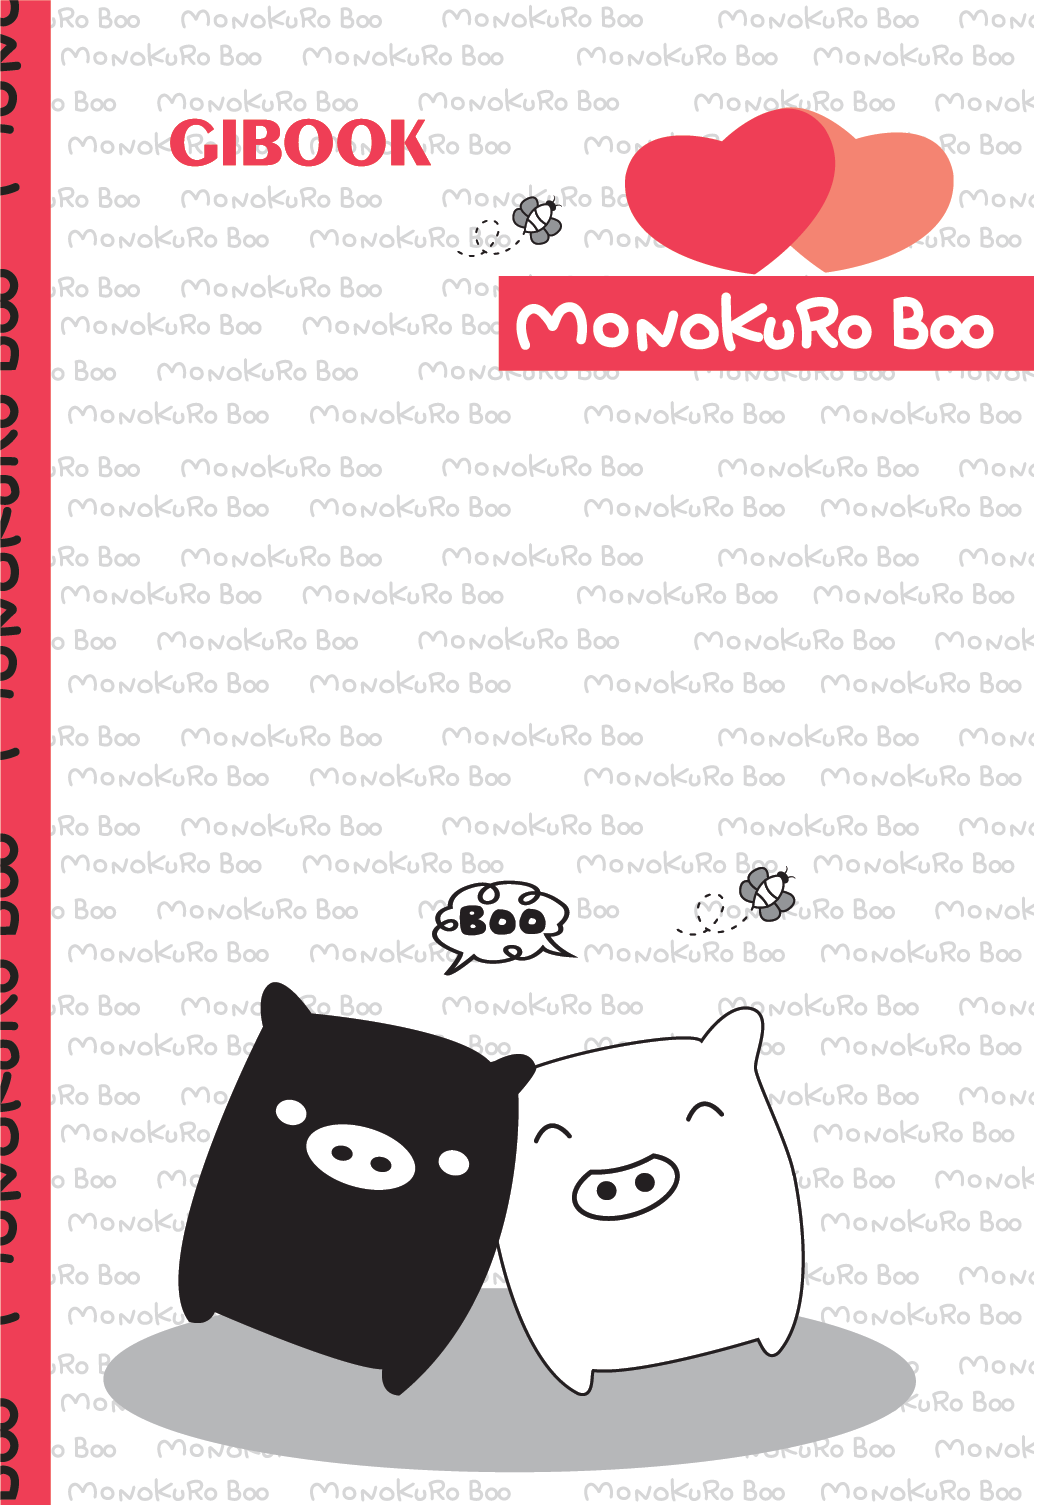 Monokuro Boo